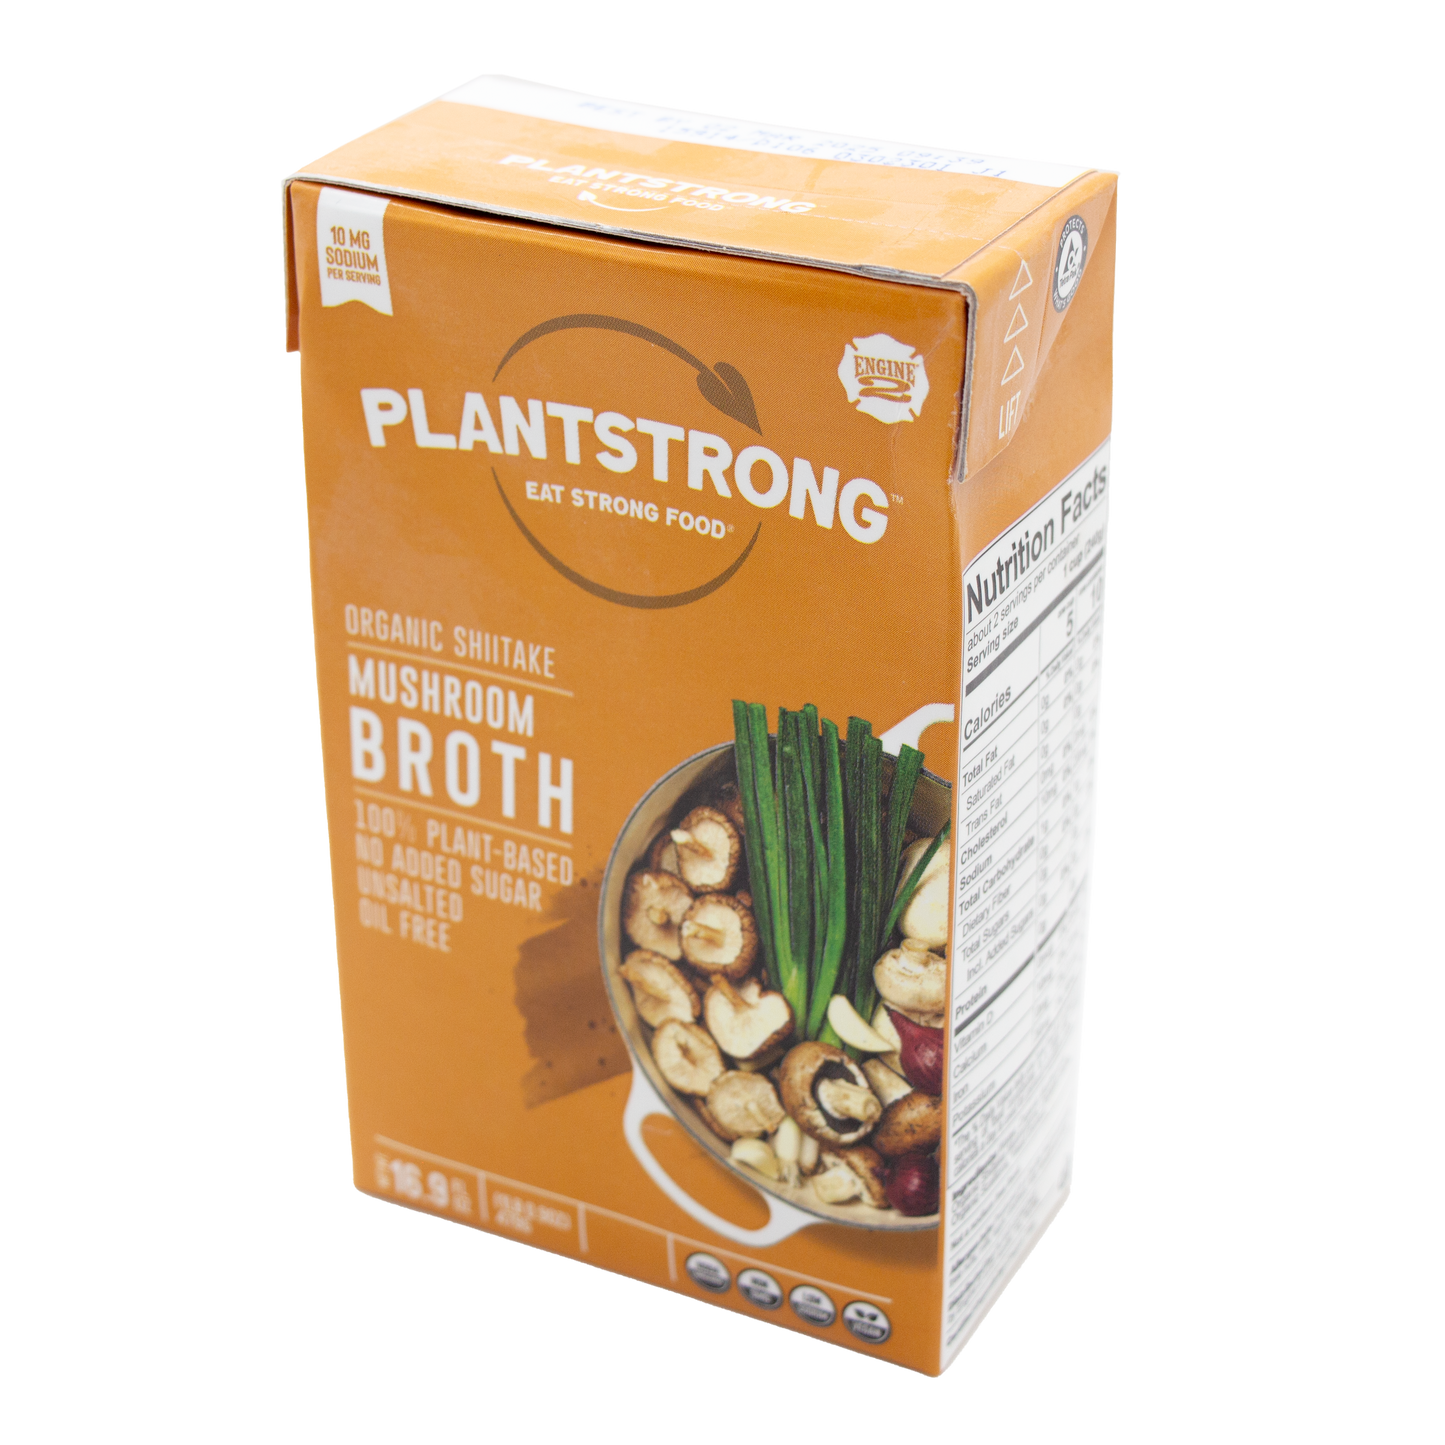 Plantstrong - Organic Shiitake Mushroom Broth